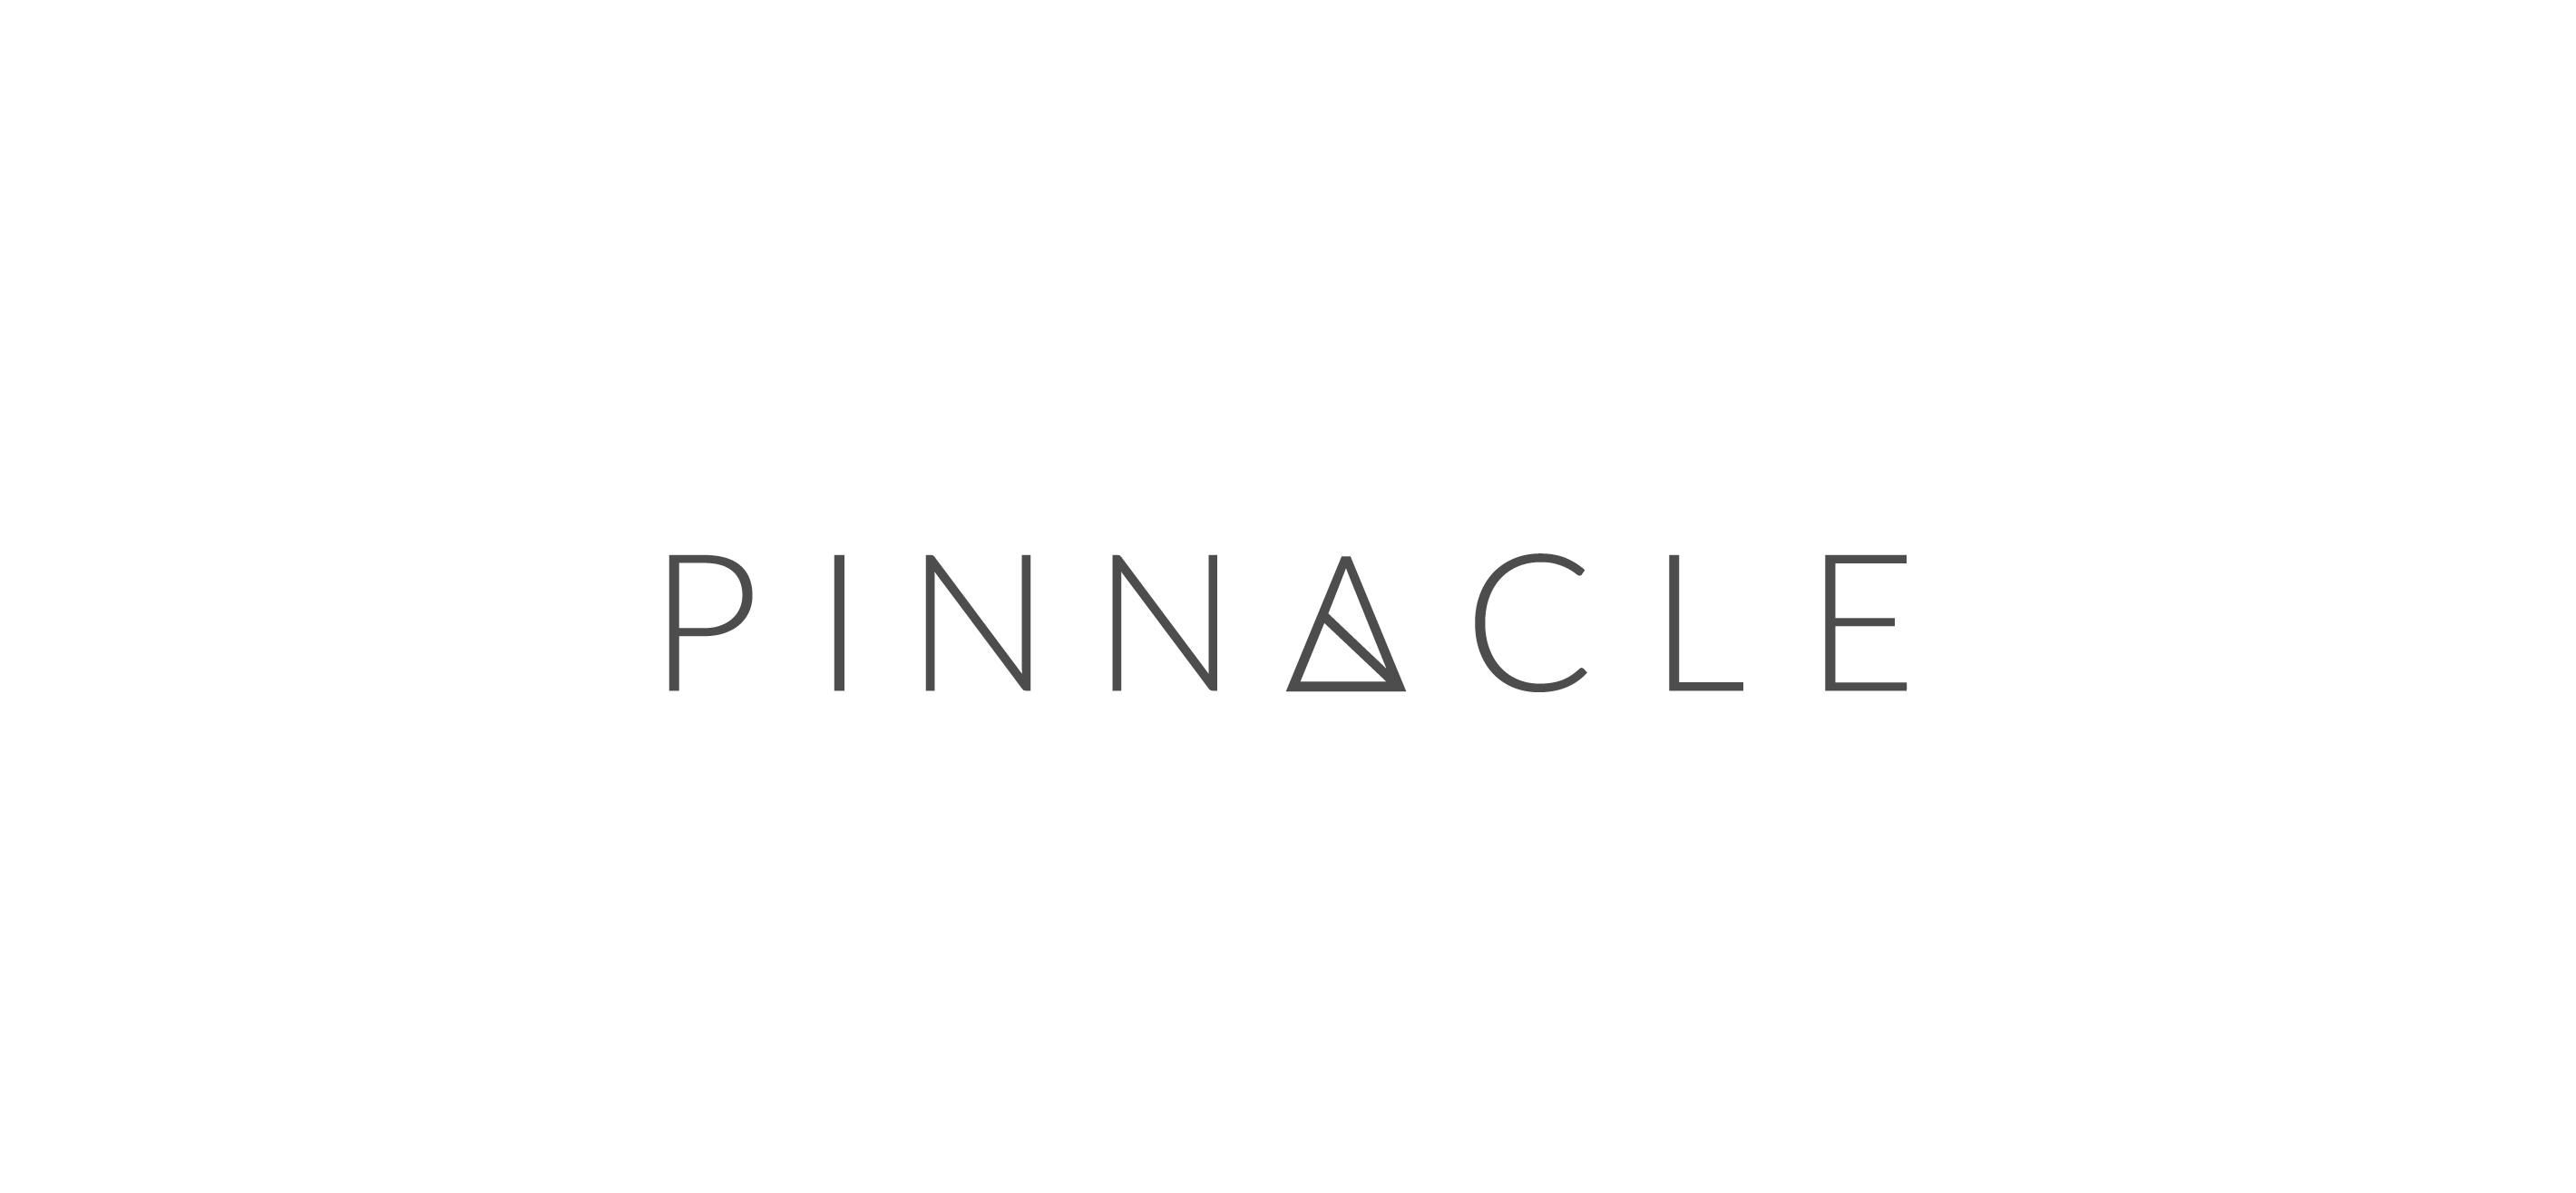 Pinnacle Drafting Design